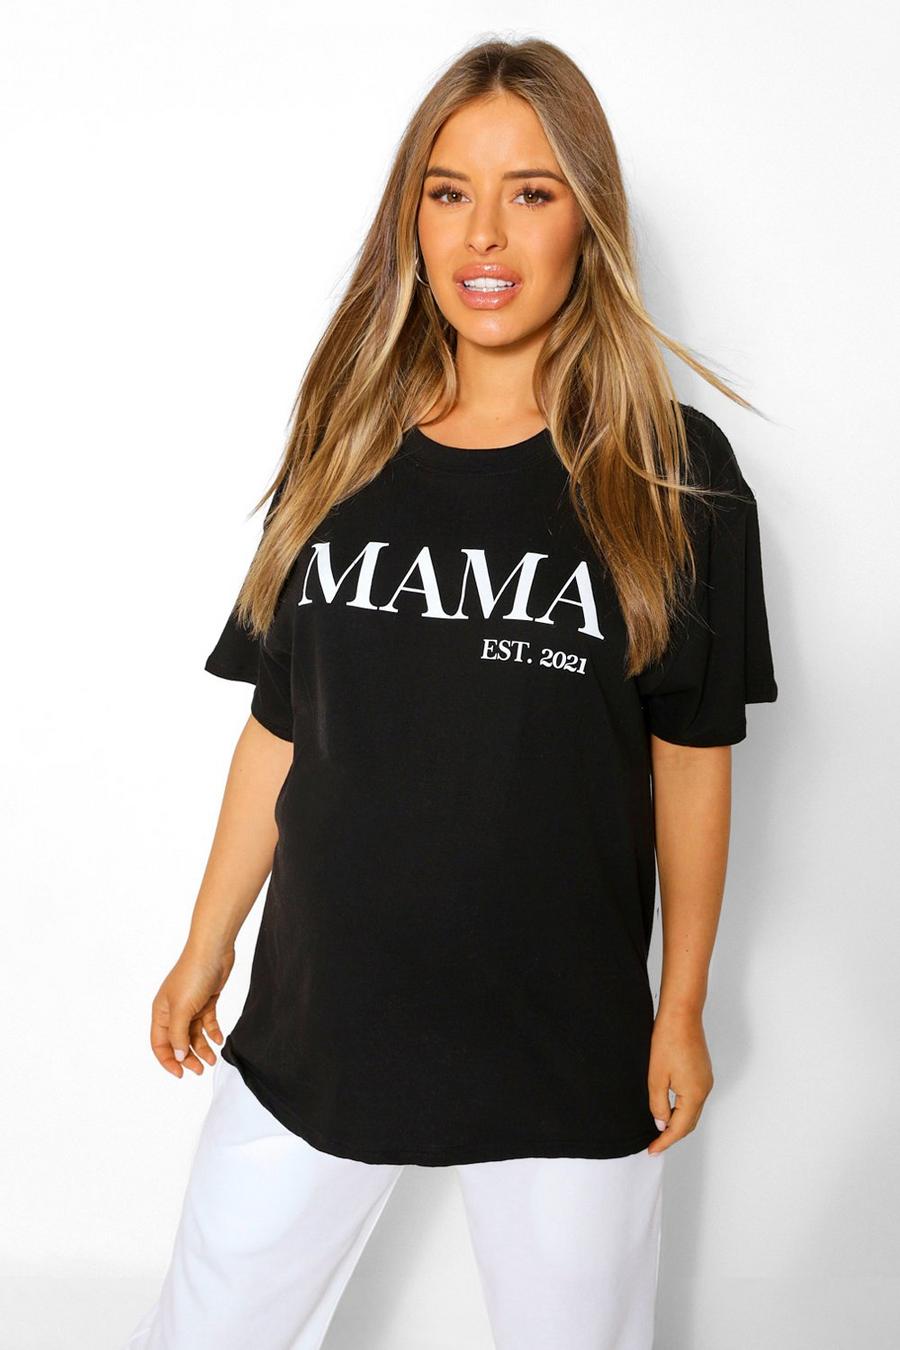 Camiseta con eslogan “Mama Est 2012” Ropa premamá, Negro image number 1